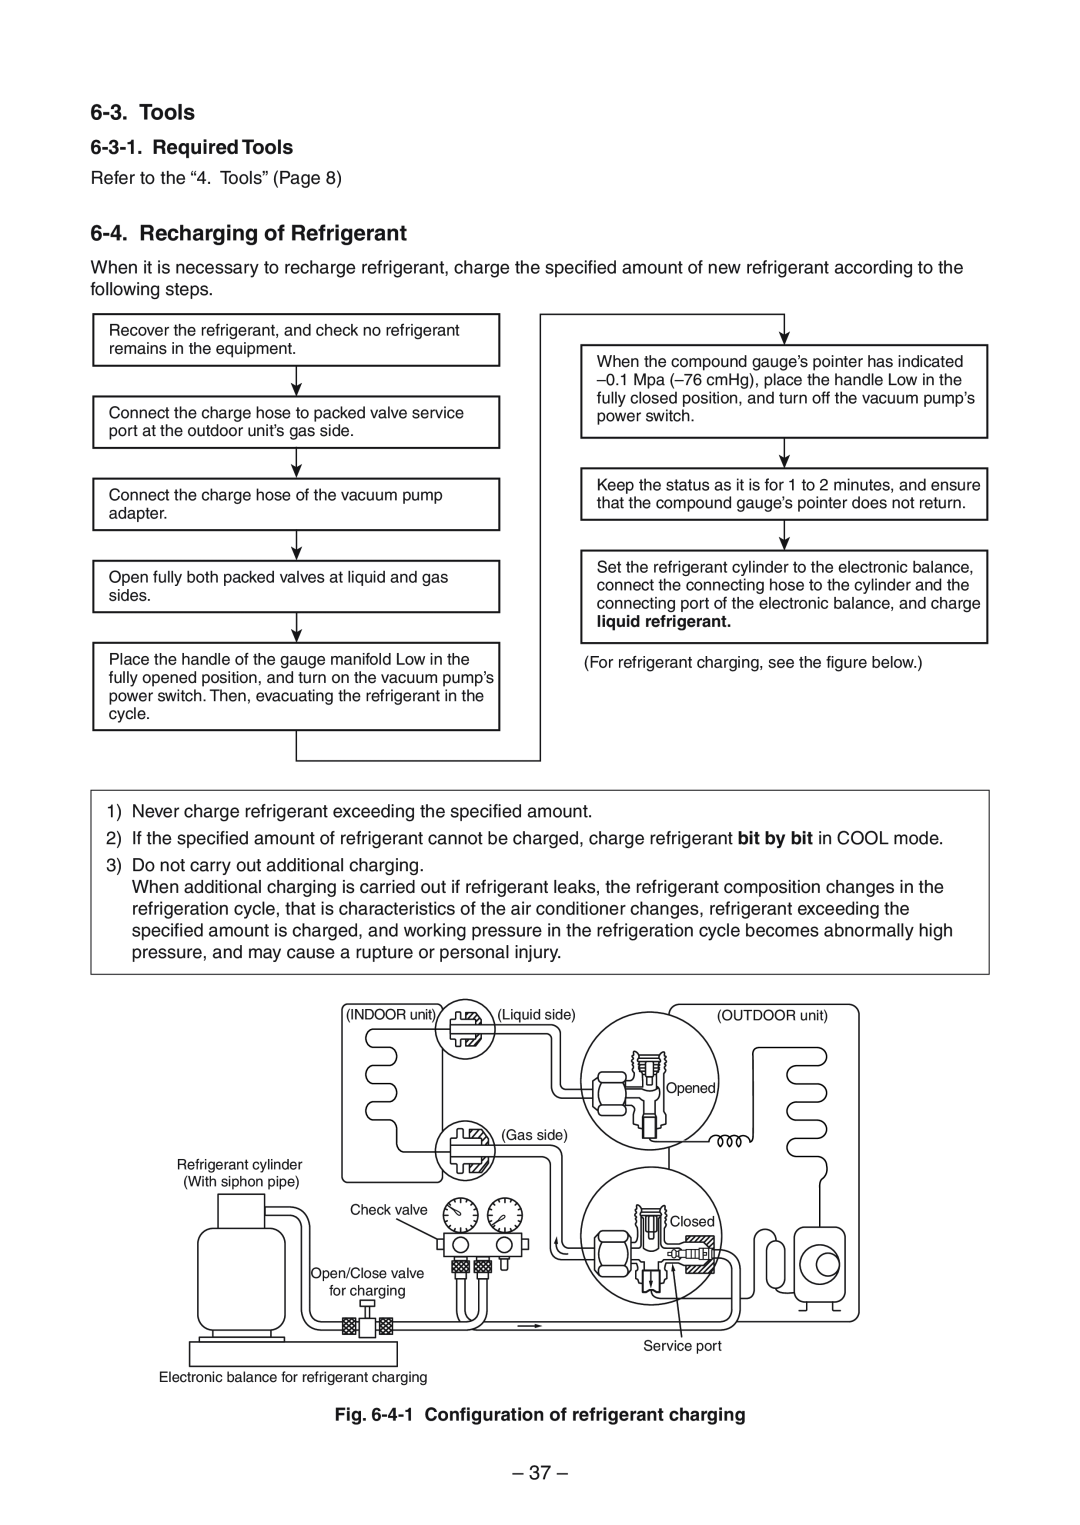 Toshiba RAV-SM1104UT-E Recharging of Refrigerant, Required Tools, 37, 4-1Configuration of refrigerant charging 